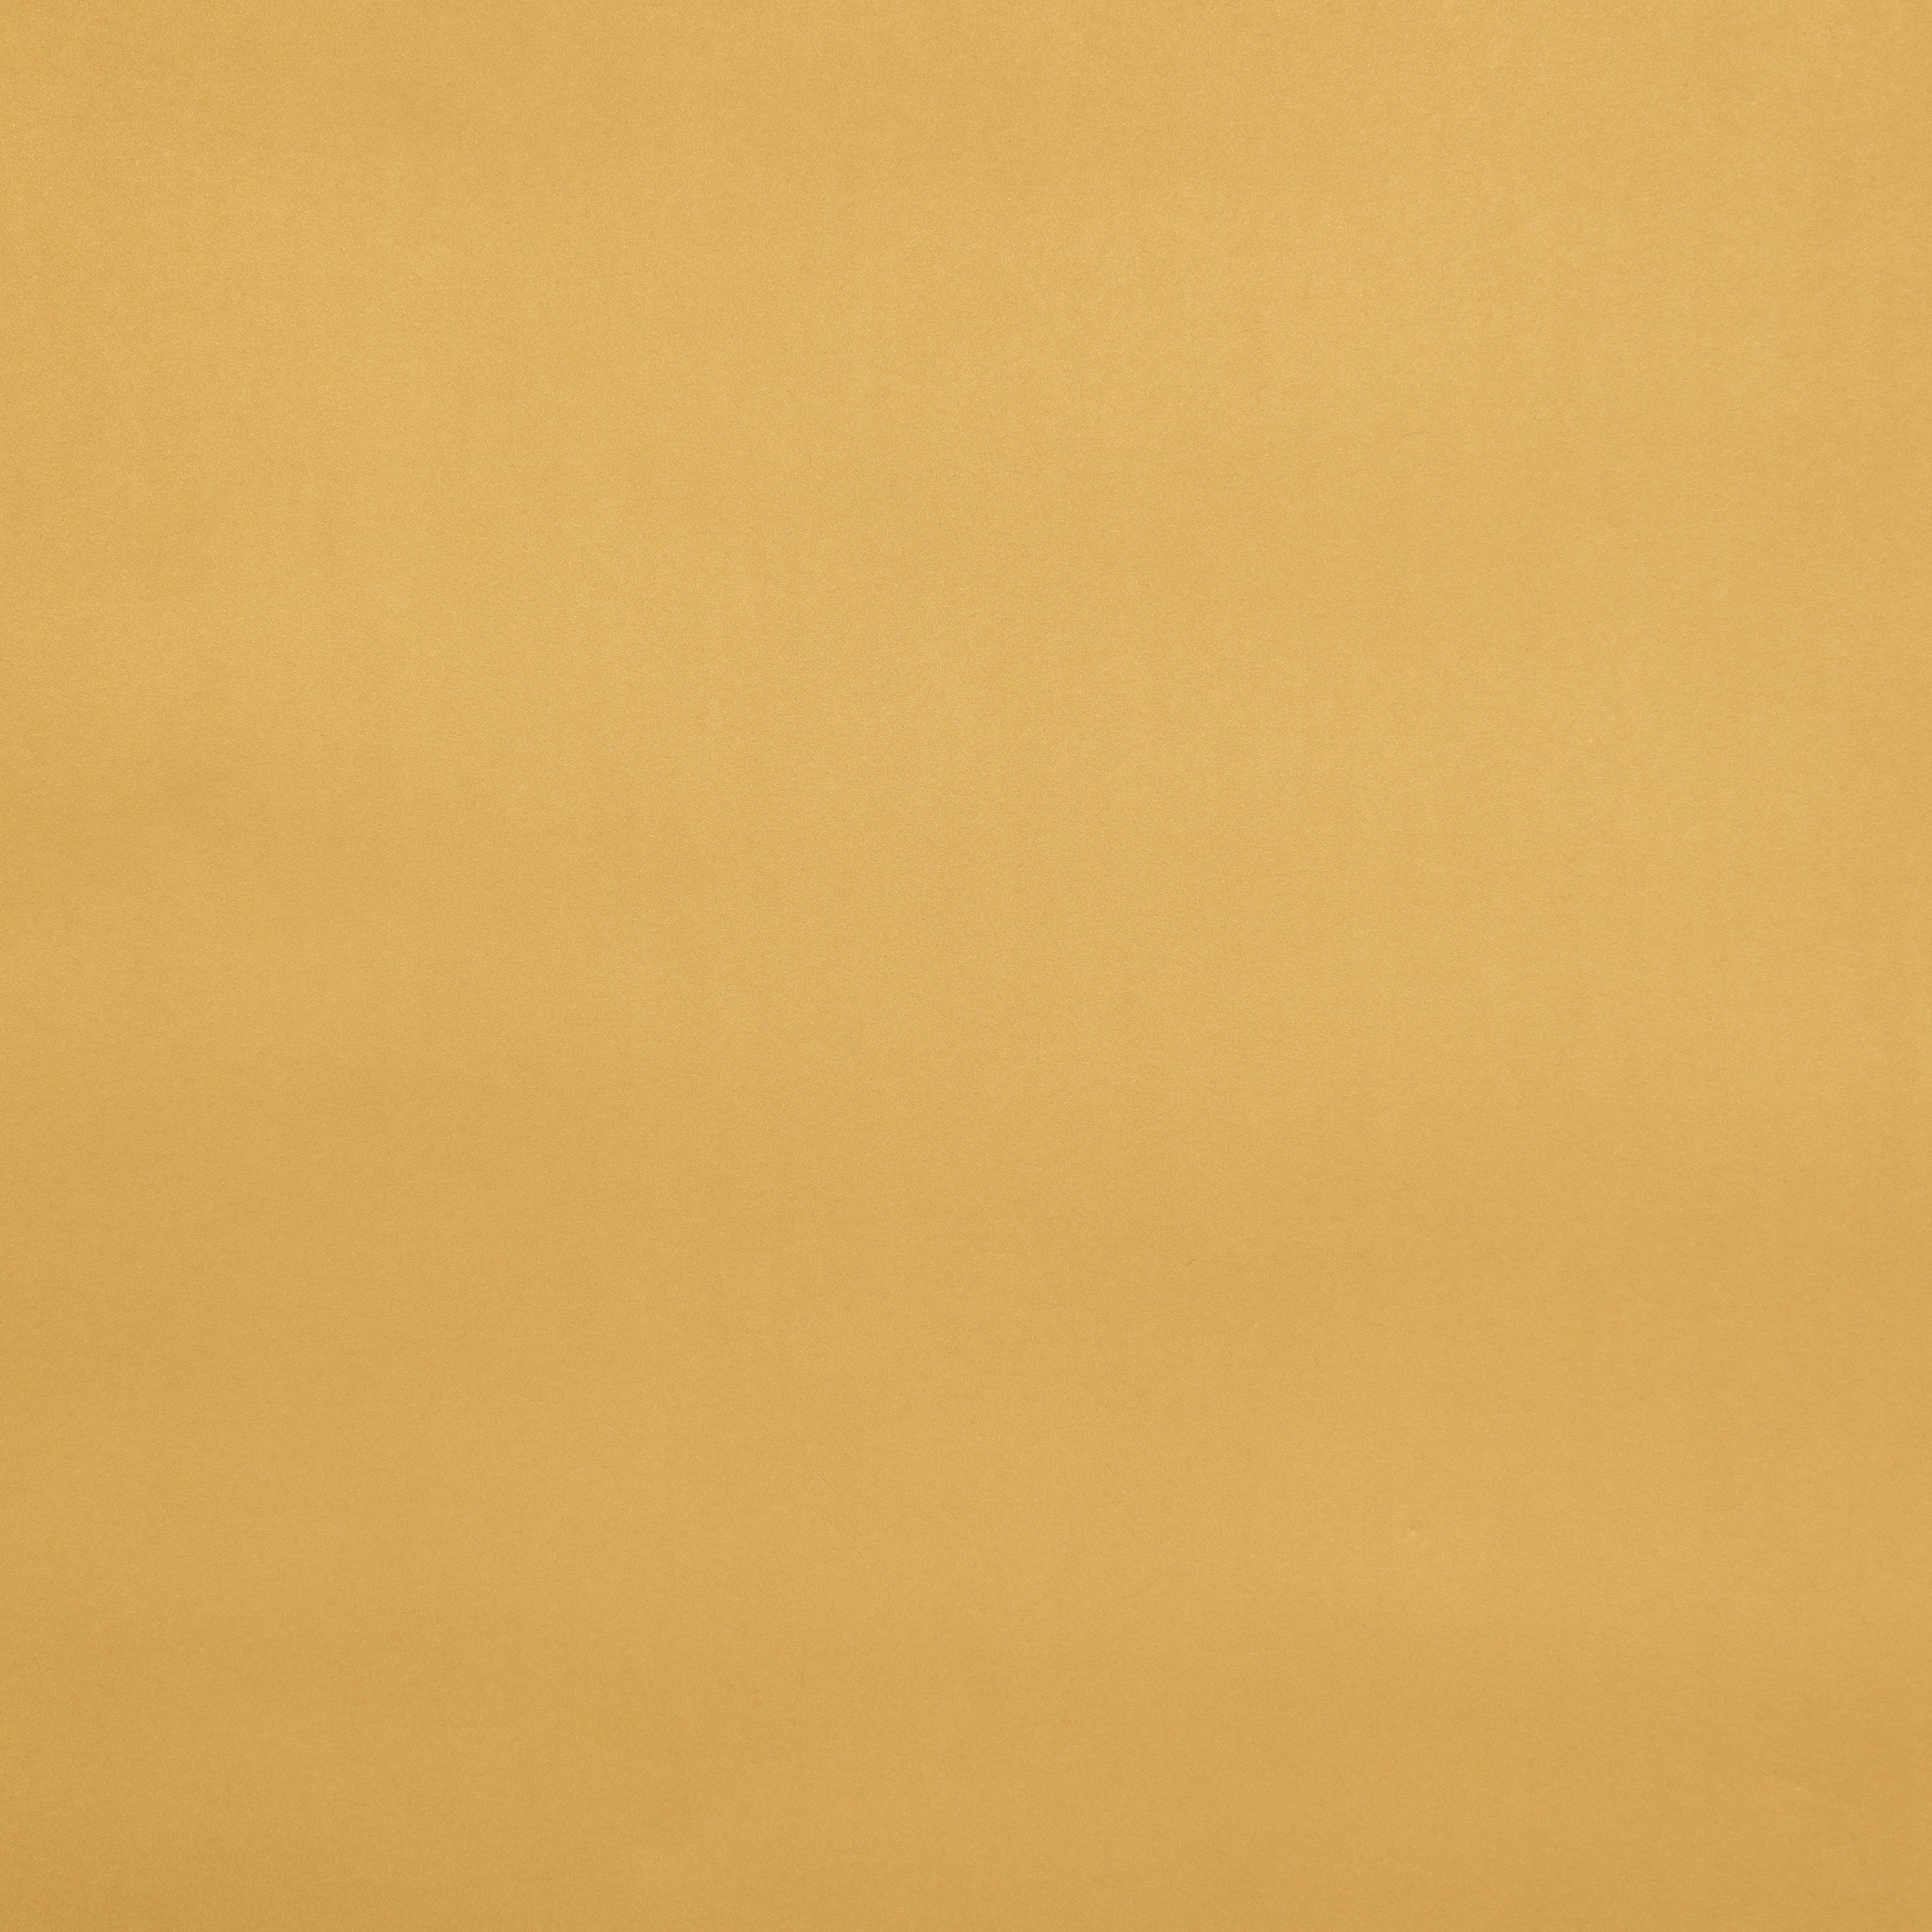 Gold Color Backdrop Sheets